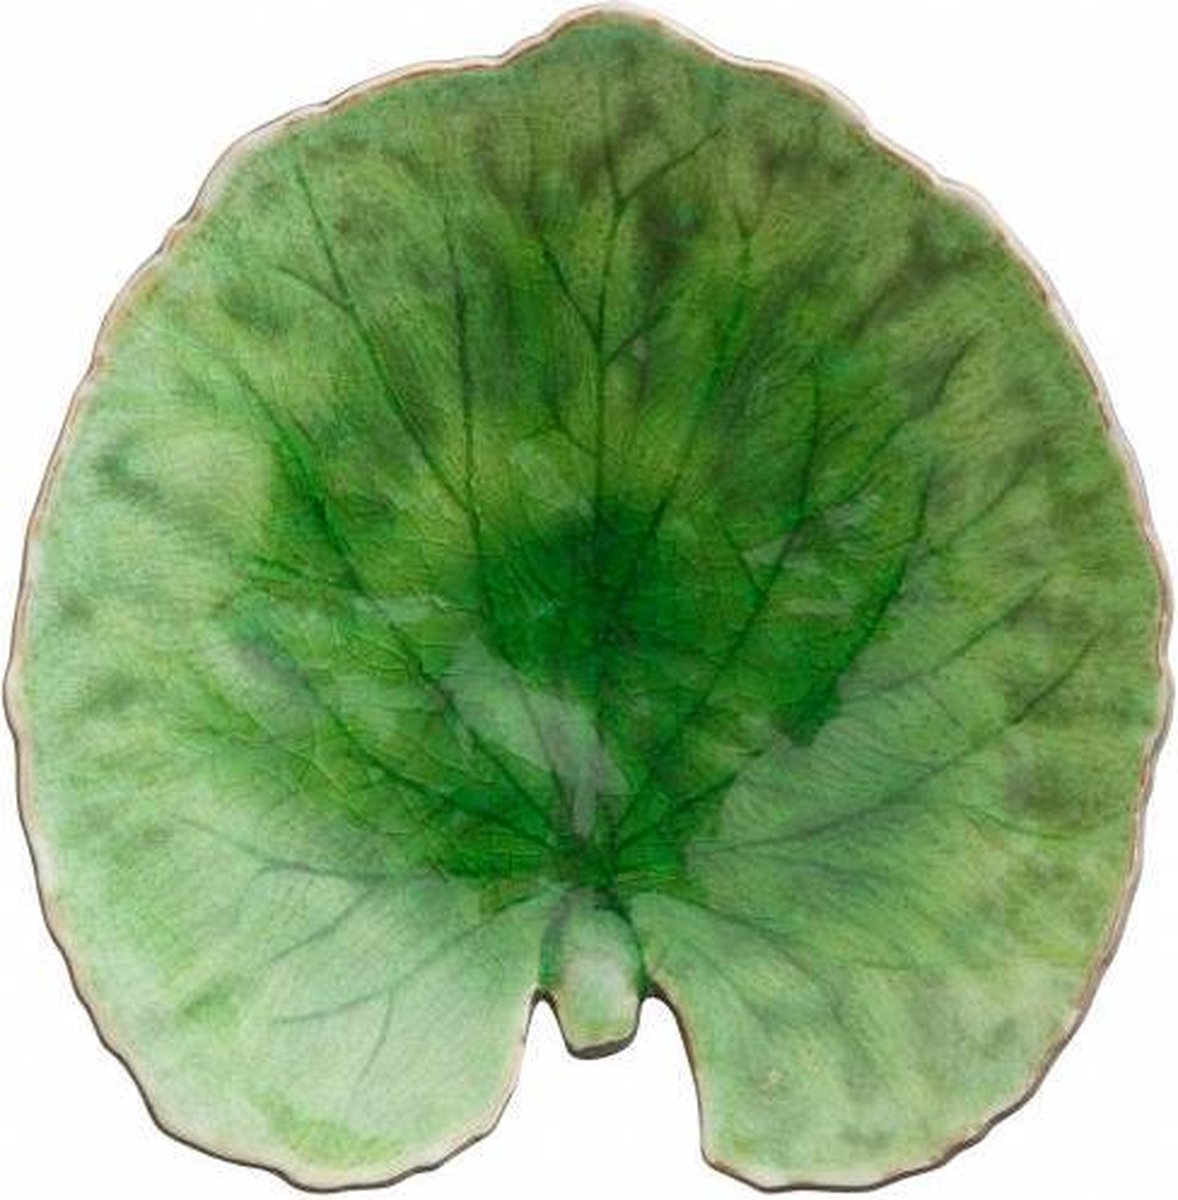 Costa Nova - Alchemille leaf - Tomato green